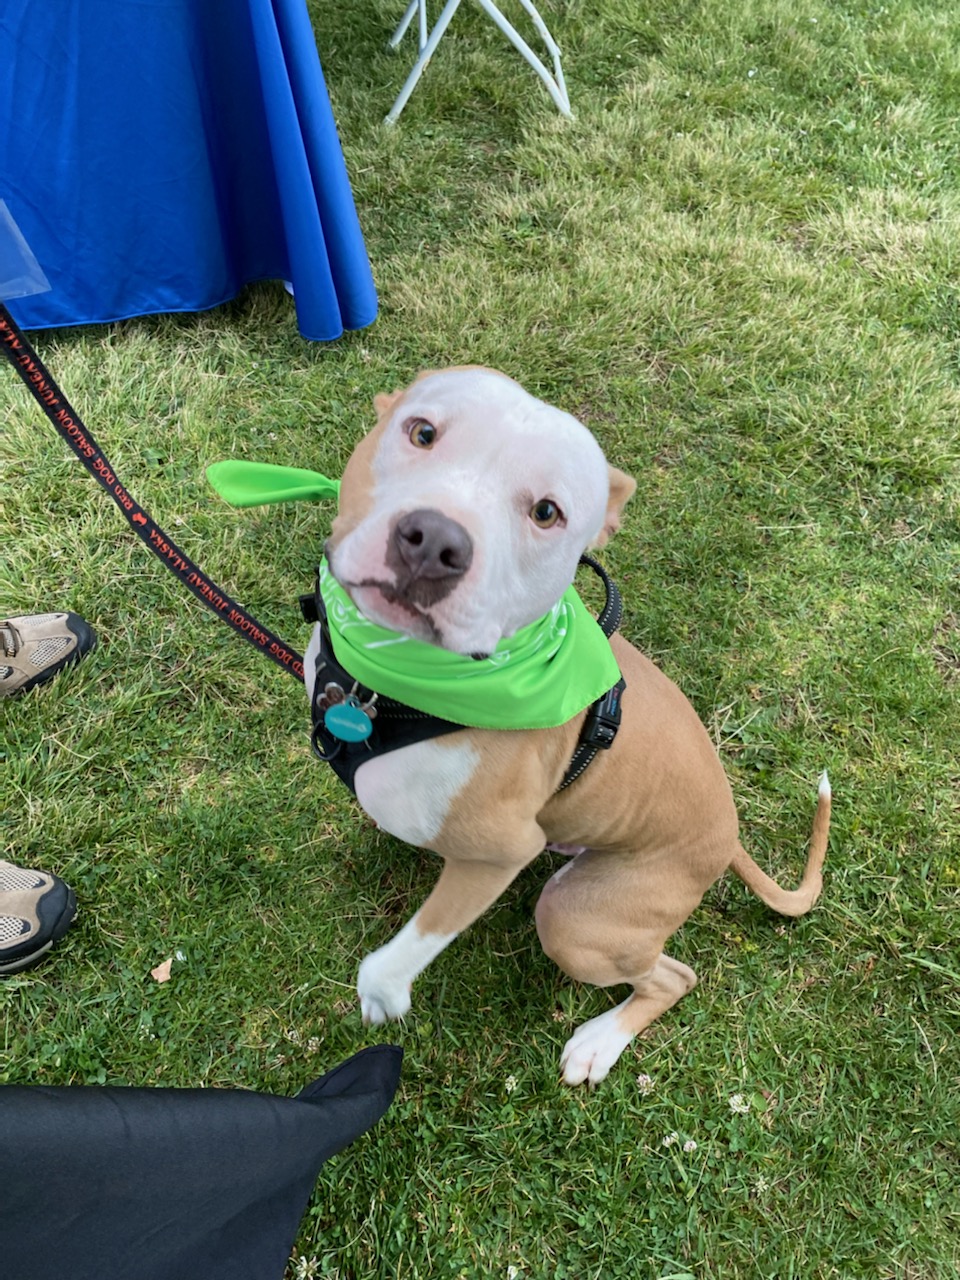 Dog wearing green bandana poses for photo